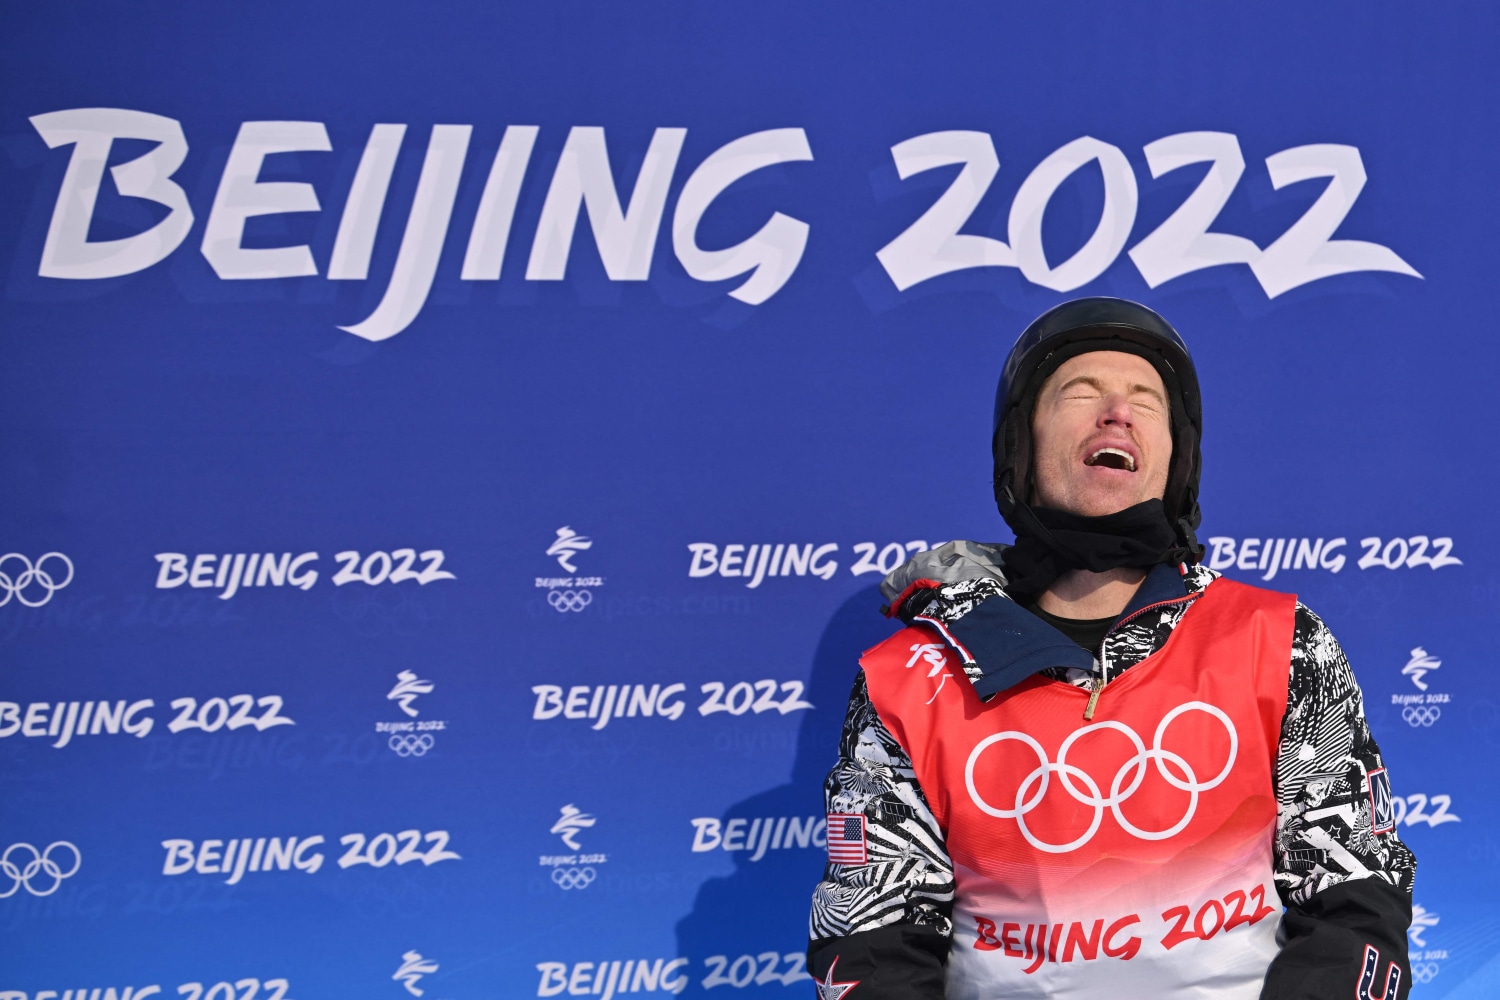 PyeongChang 2018: Shaun White wins halfpipe gold on last run